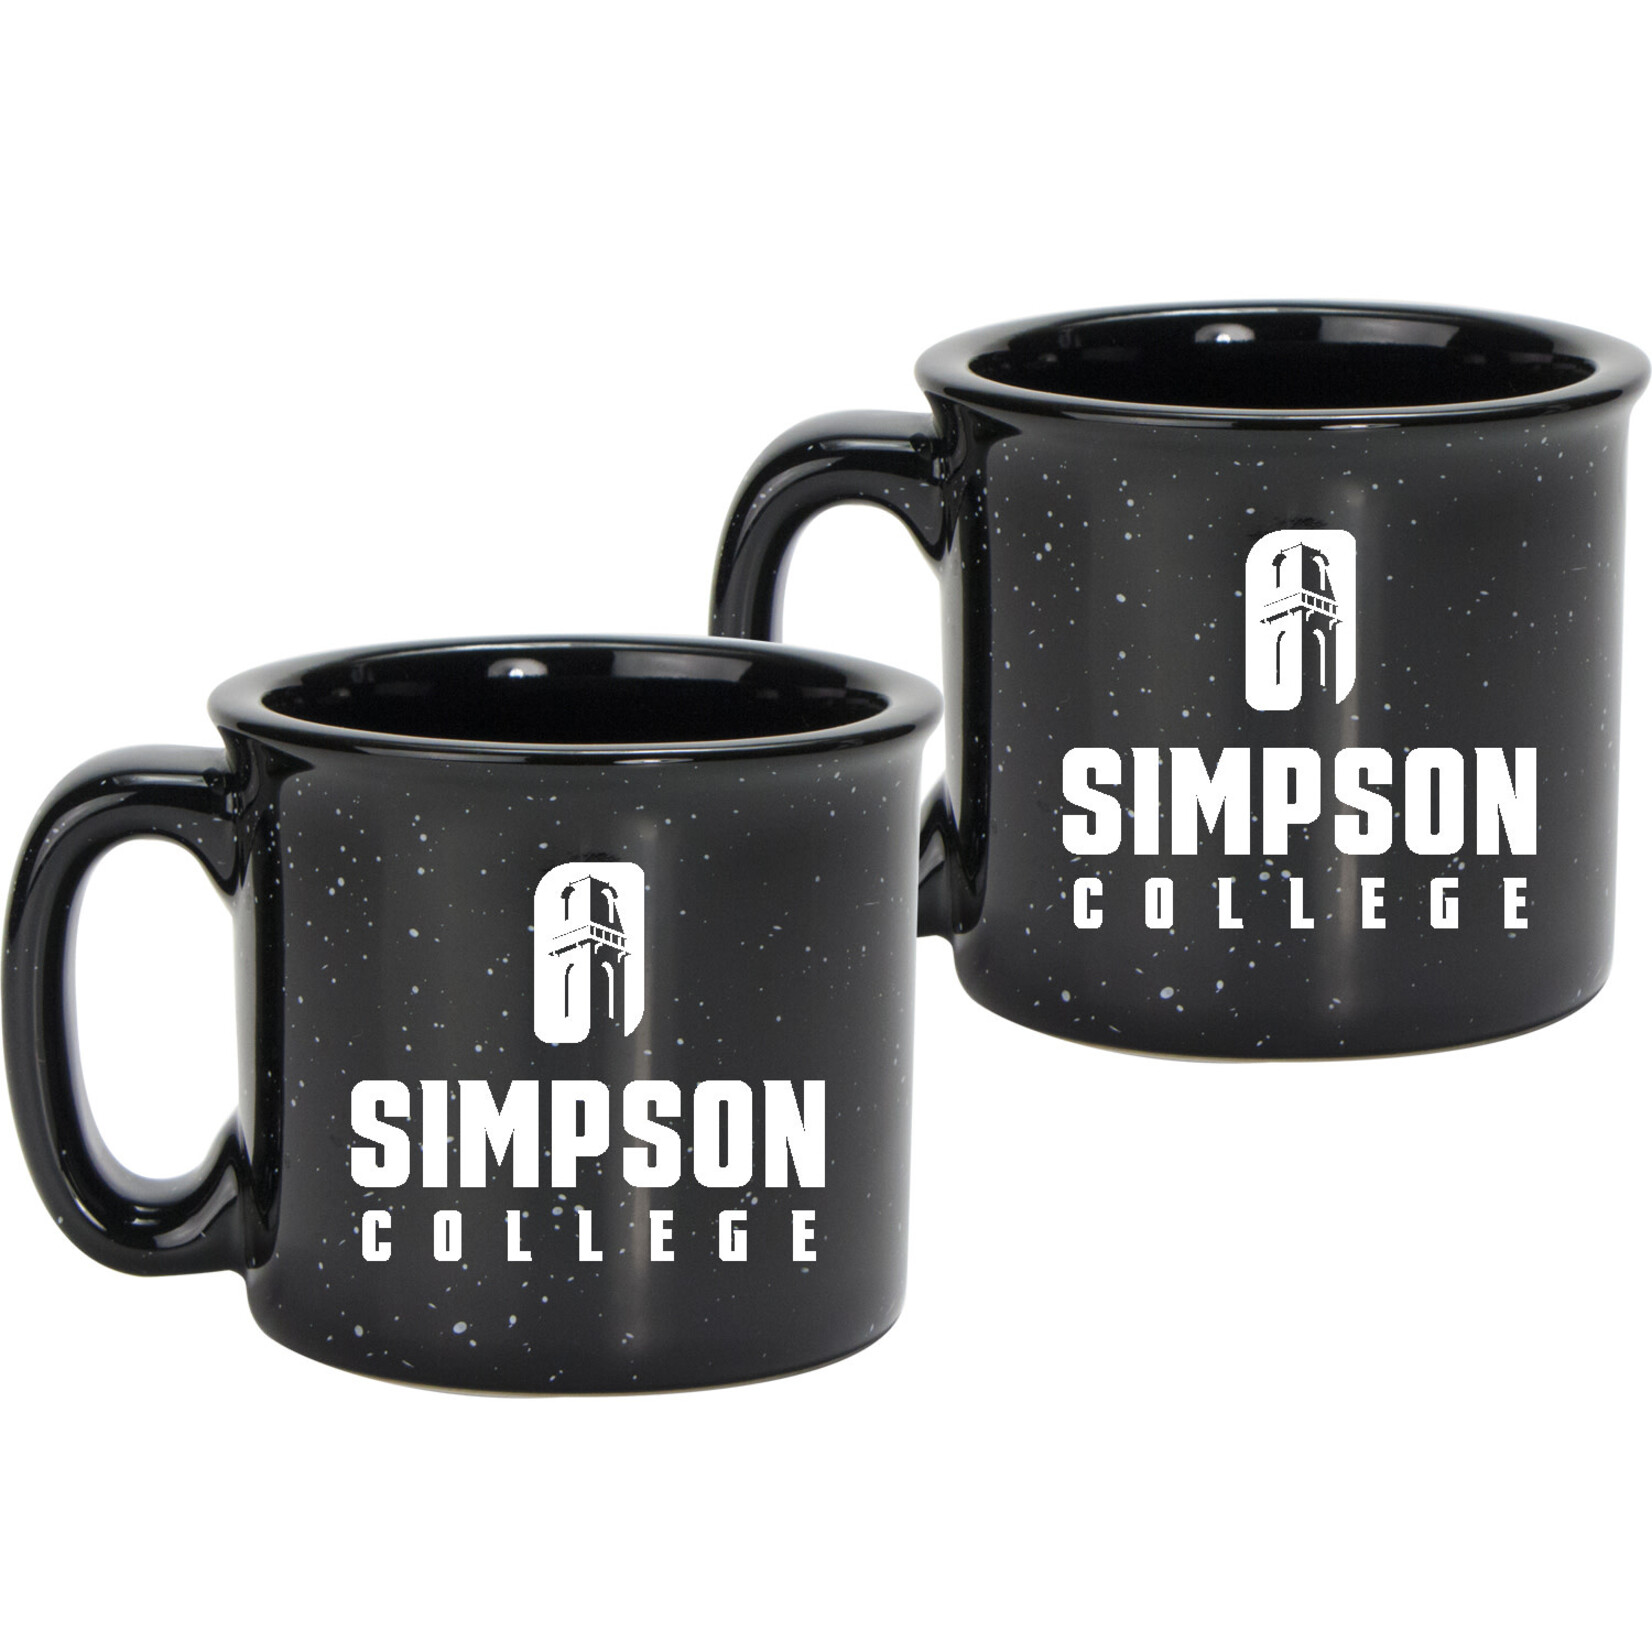 Campus Crystal DROP SHIP - Ceramic Mugs Set